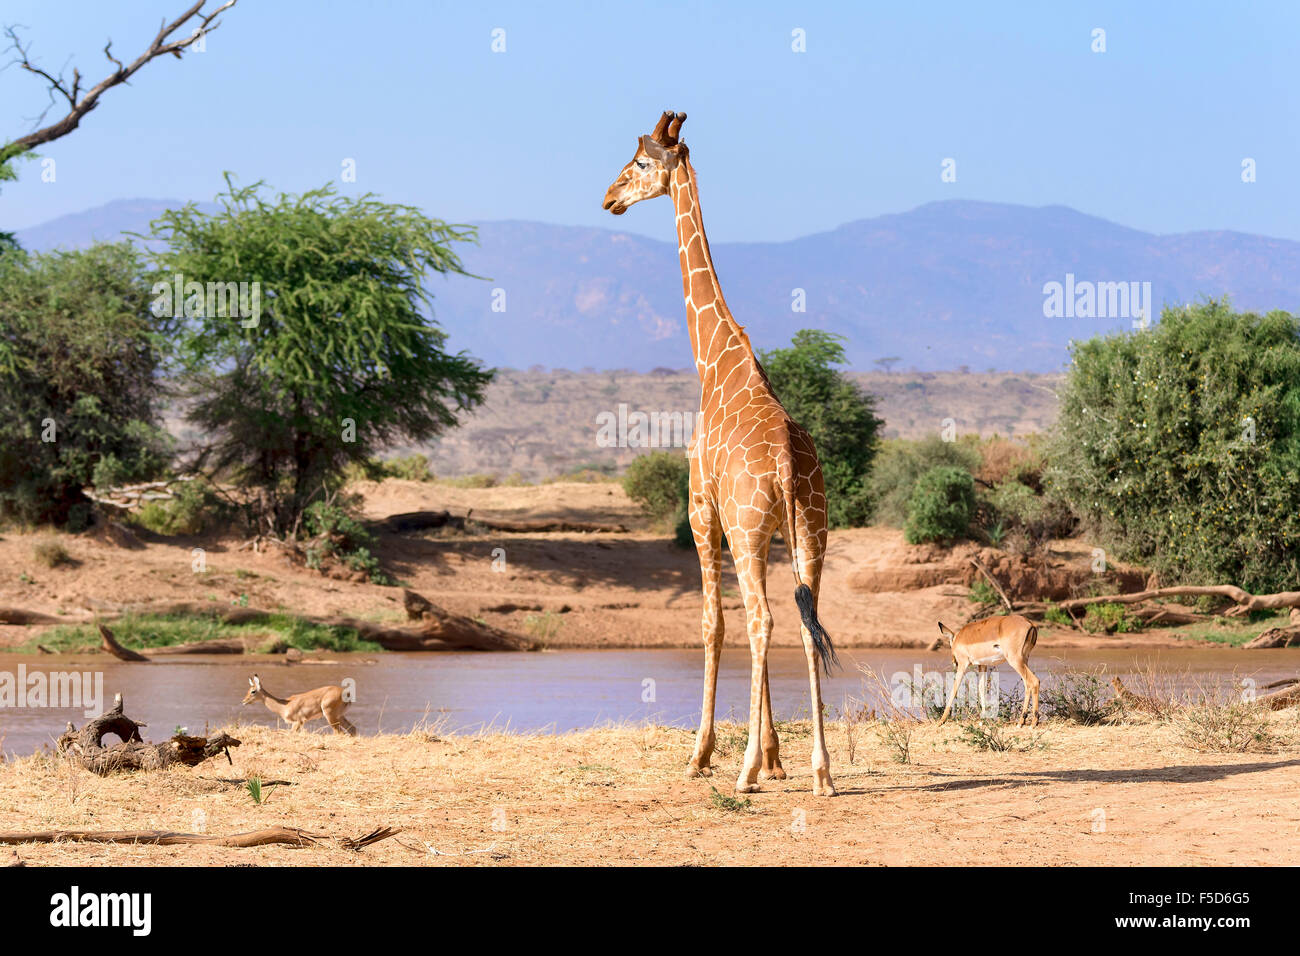 Giraffe réticulée ou Somali Girafe (Giraffa camelopardalis reticulata) par la rivière, la réserve nationale de Samburu, Kenya Banque D'Images